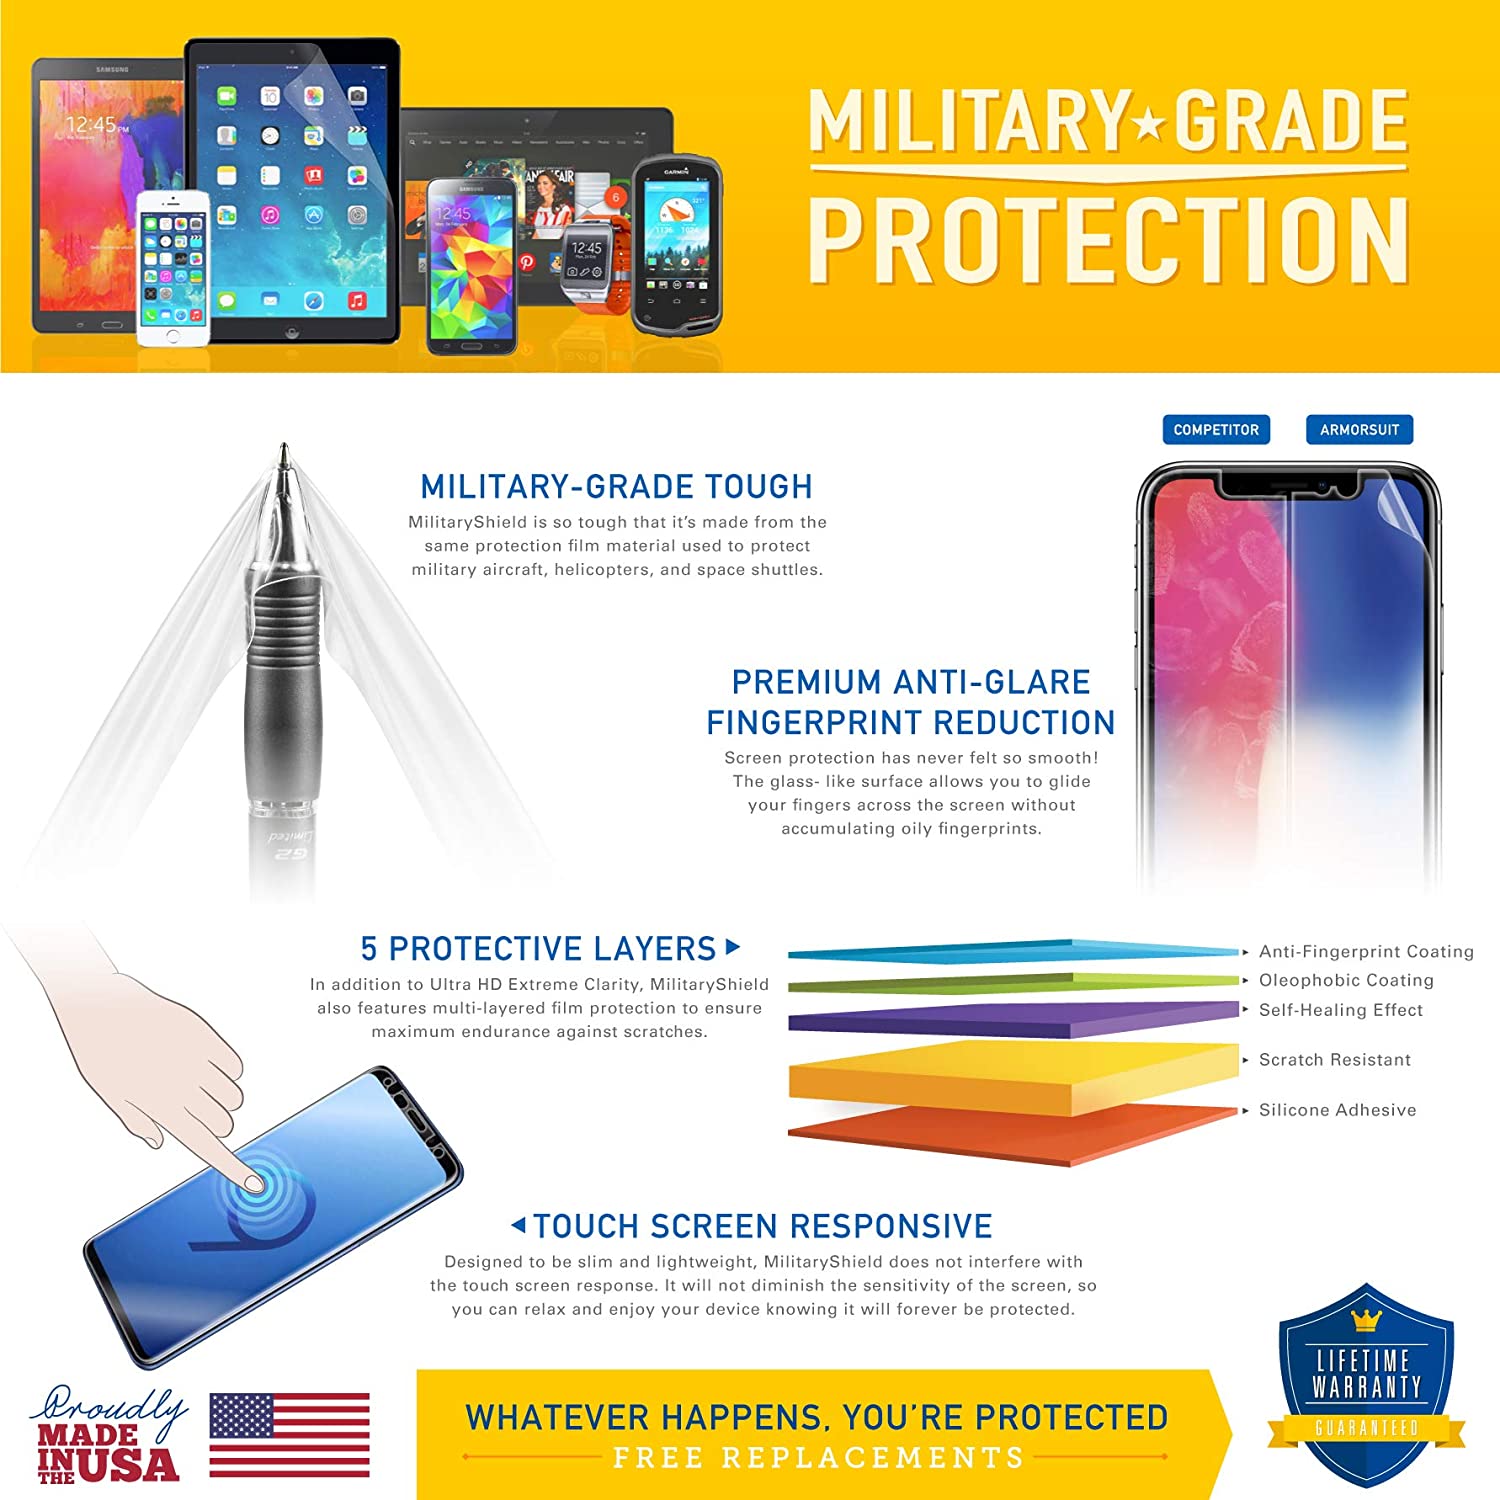 [2-Pack] Samsung Galaxy Note II Screen Protector